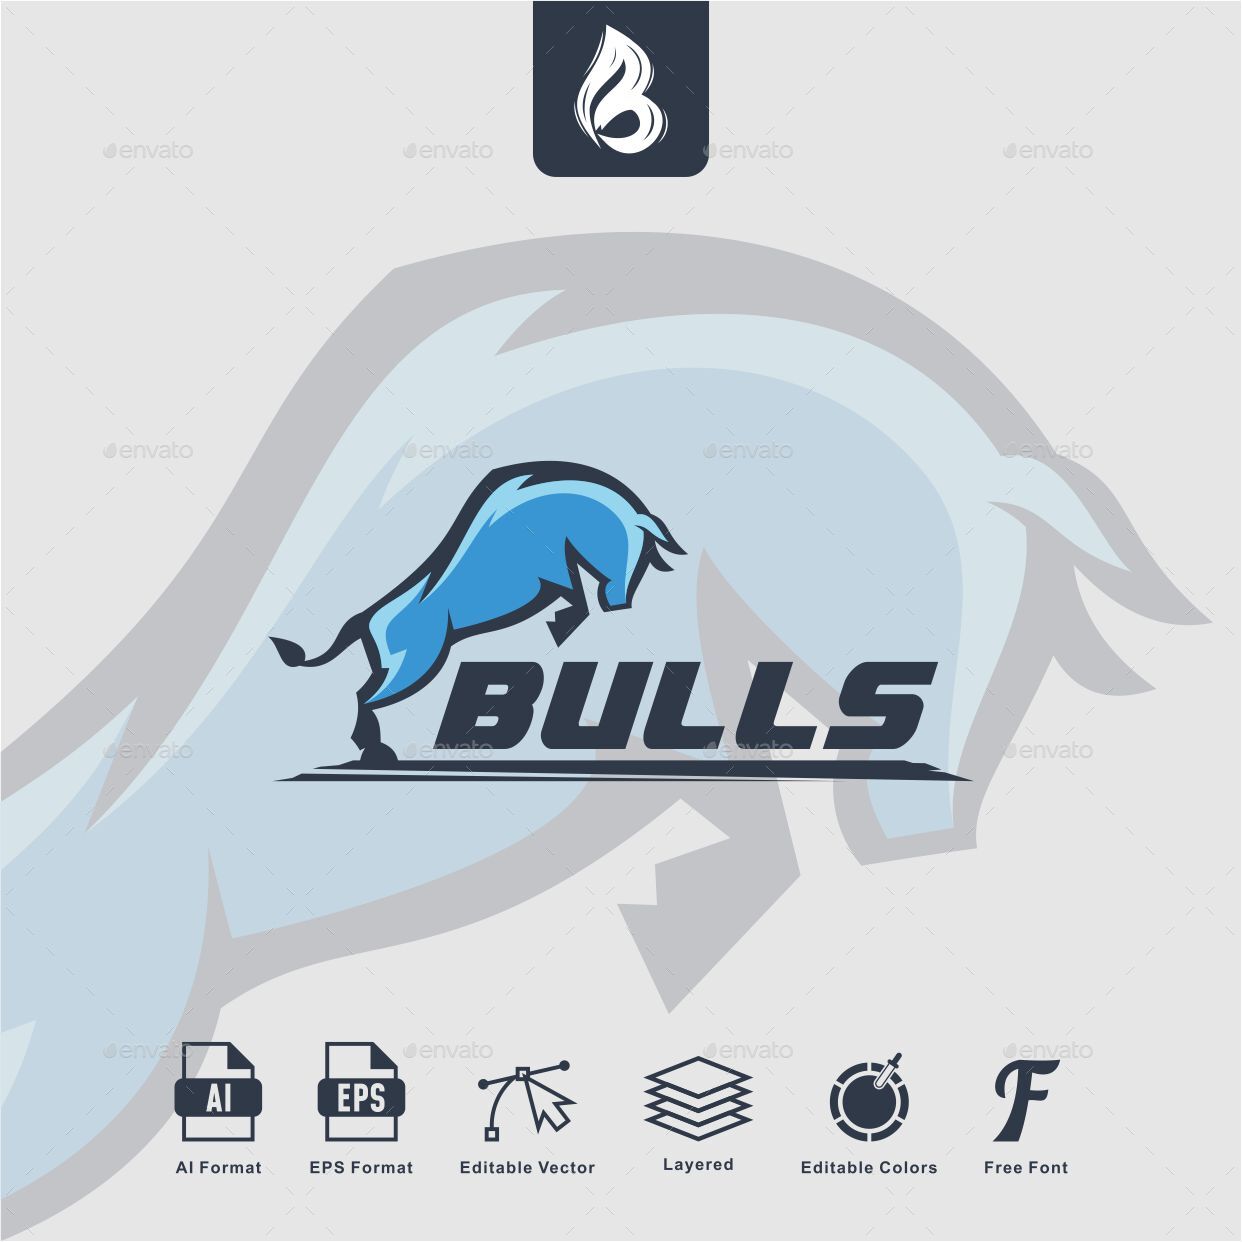 Bulls Logo by burhan006 | GraphicRiver